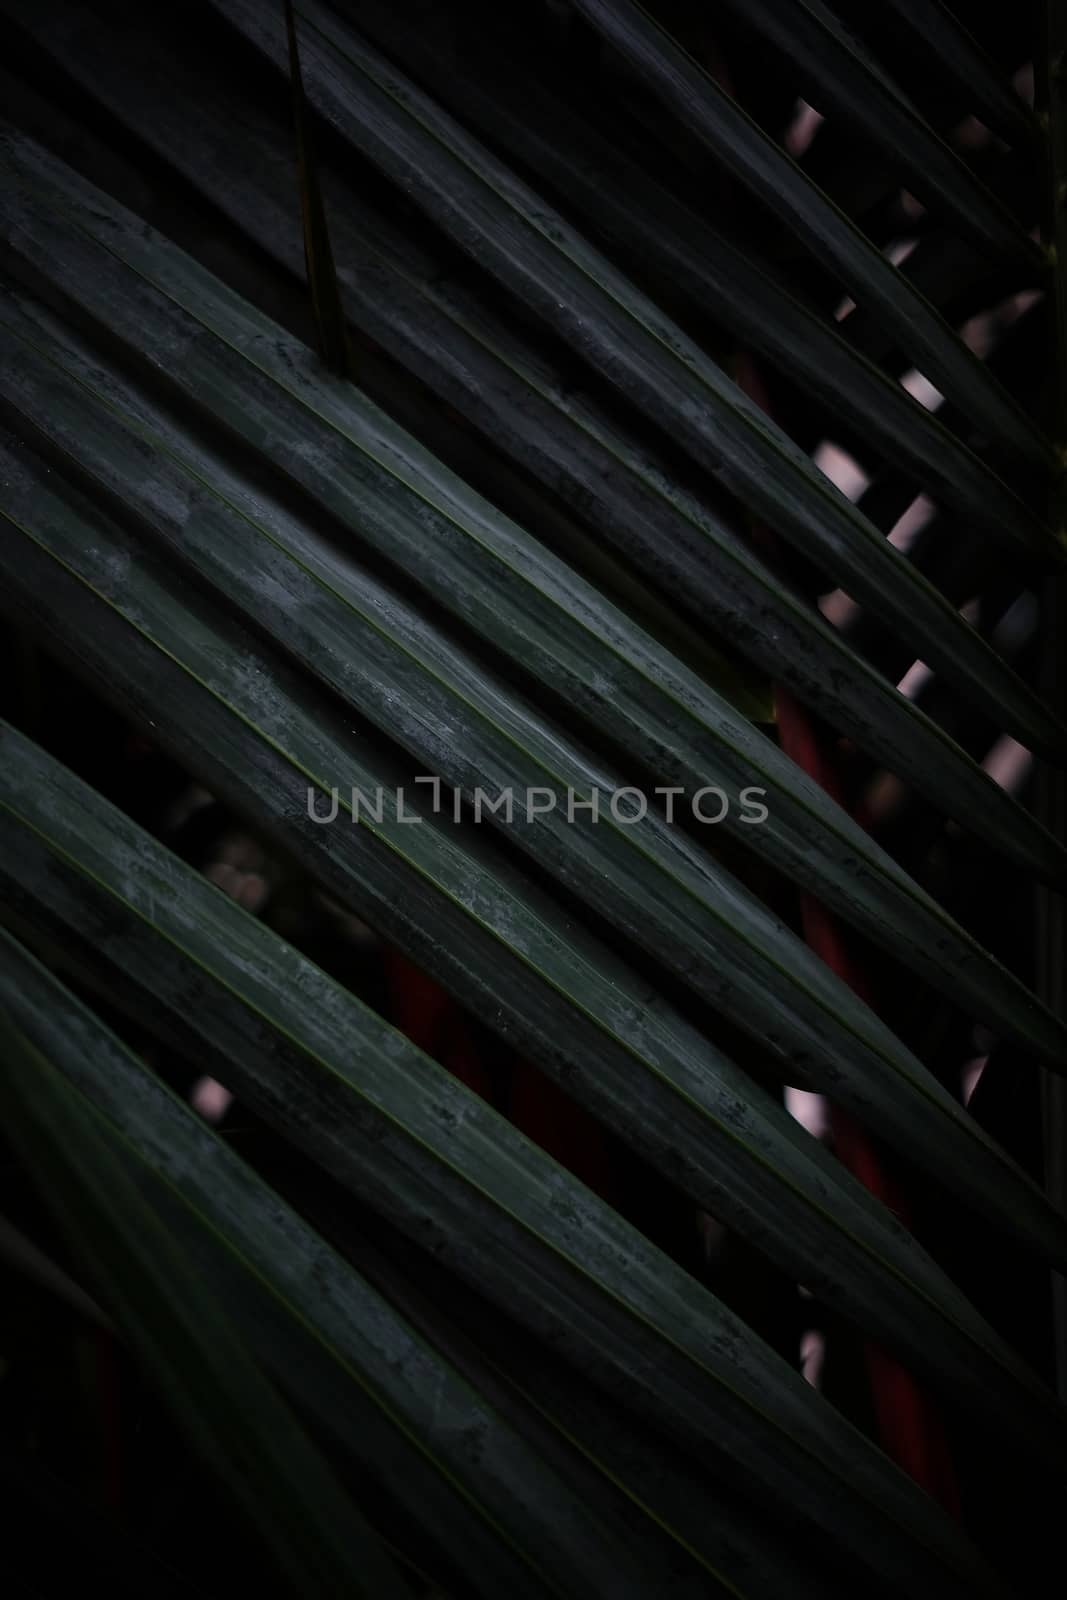 Palm Leaves in Dark Tone.